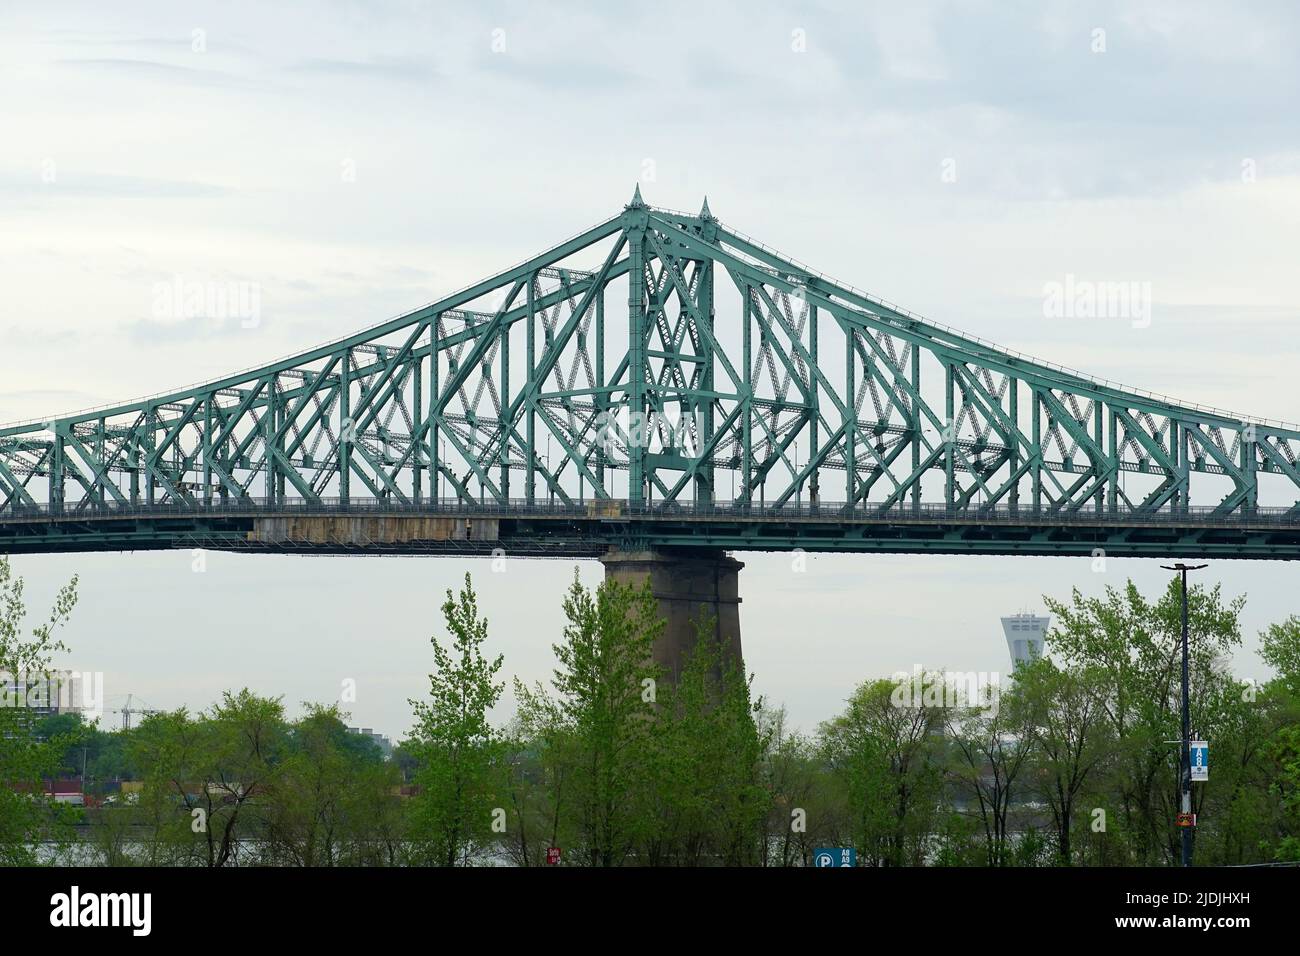 Jacques Cartier Bridge, pont Jacques-Cartier, Saint Lawrence River, Montreal, Quebec province, Canada, North America Stock Photo